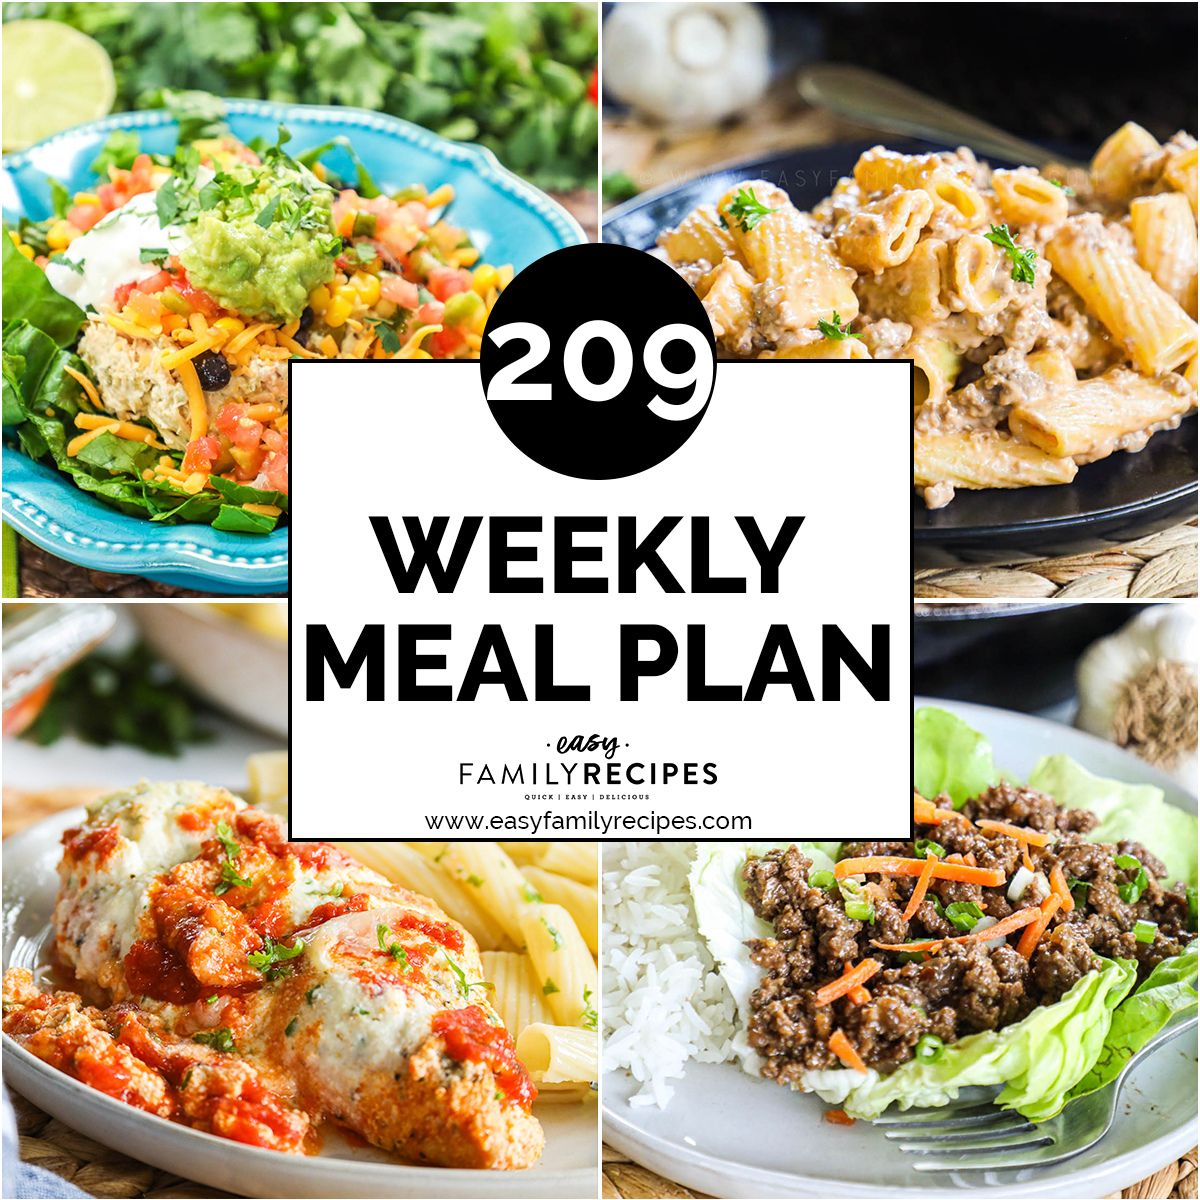 Weekly Meal Plan – 209